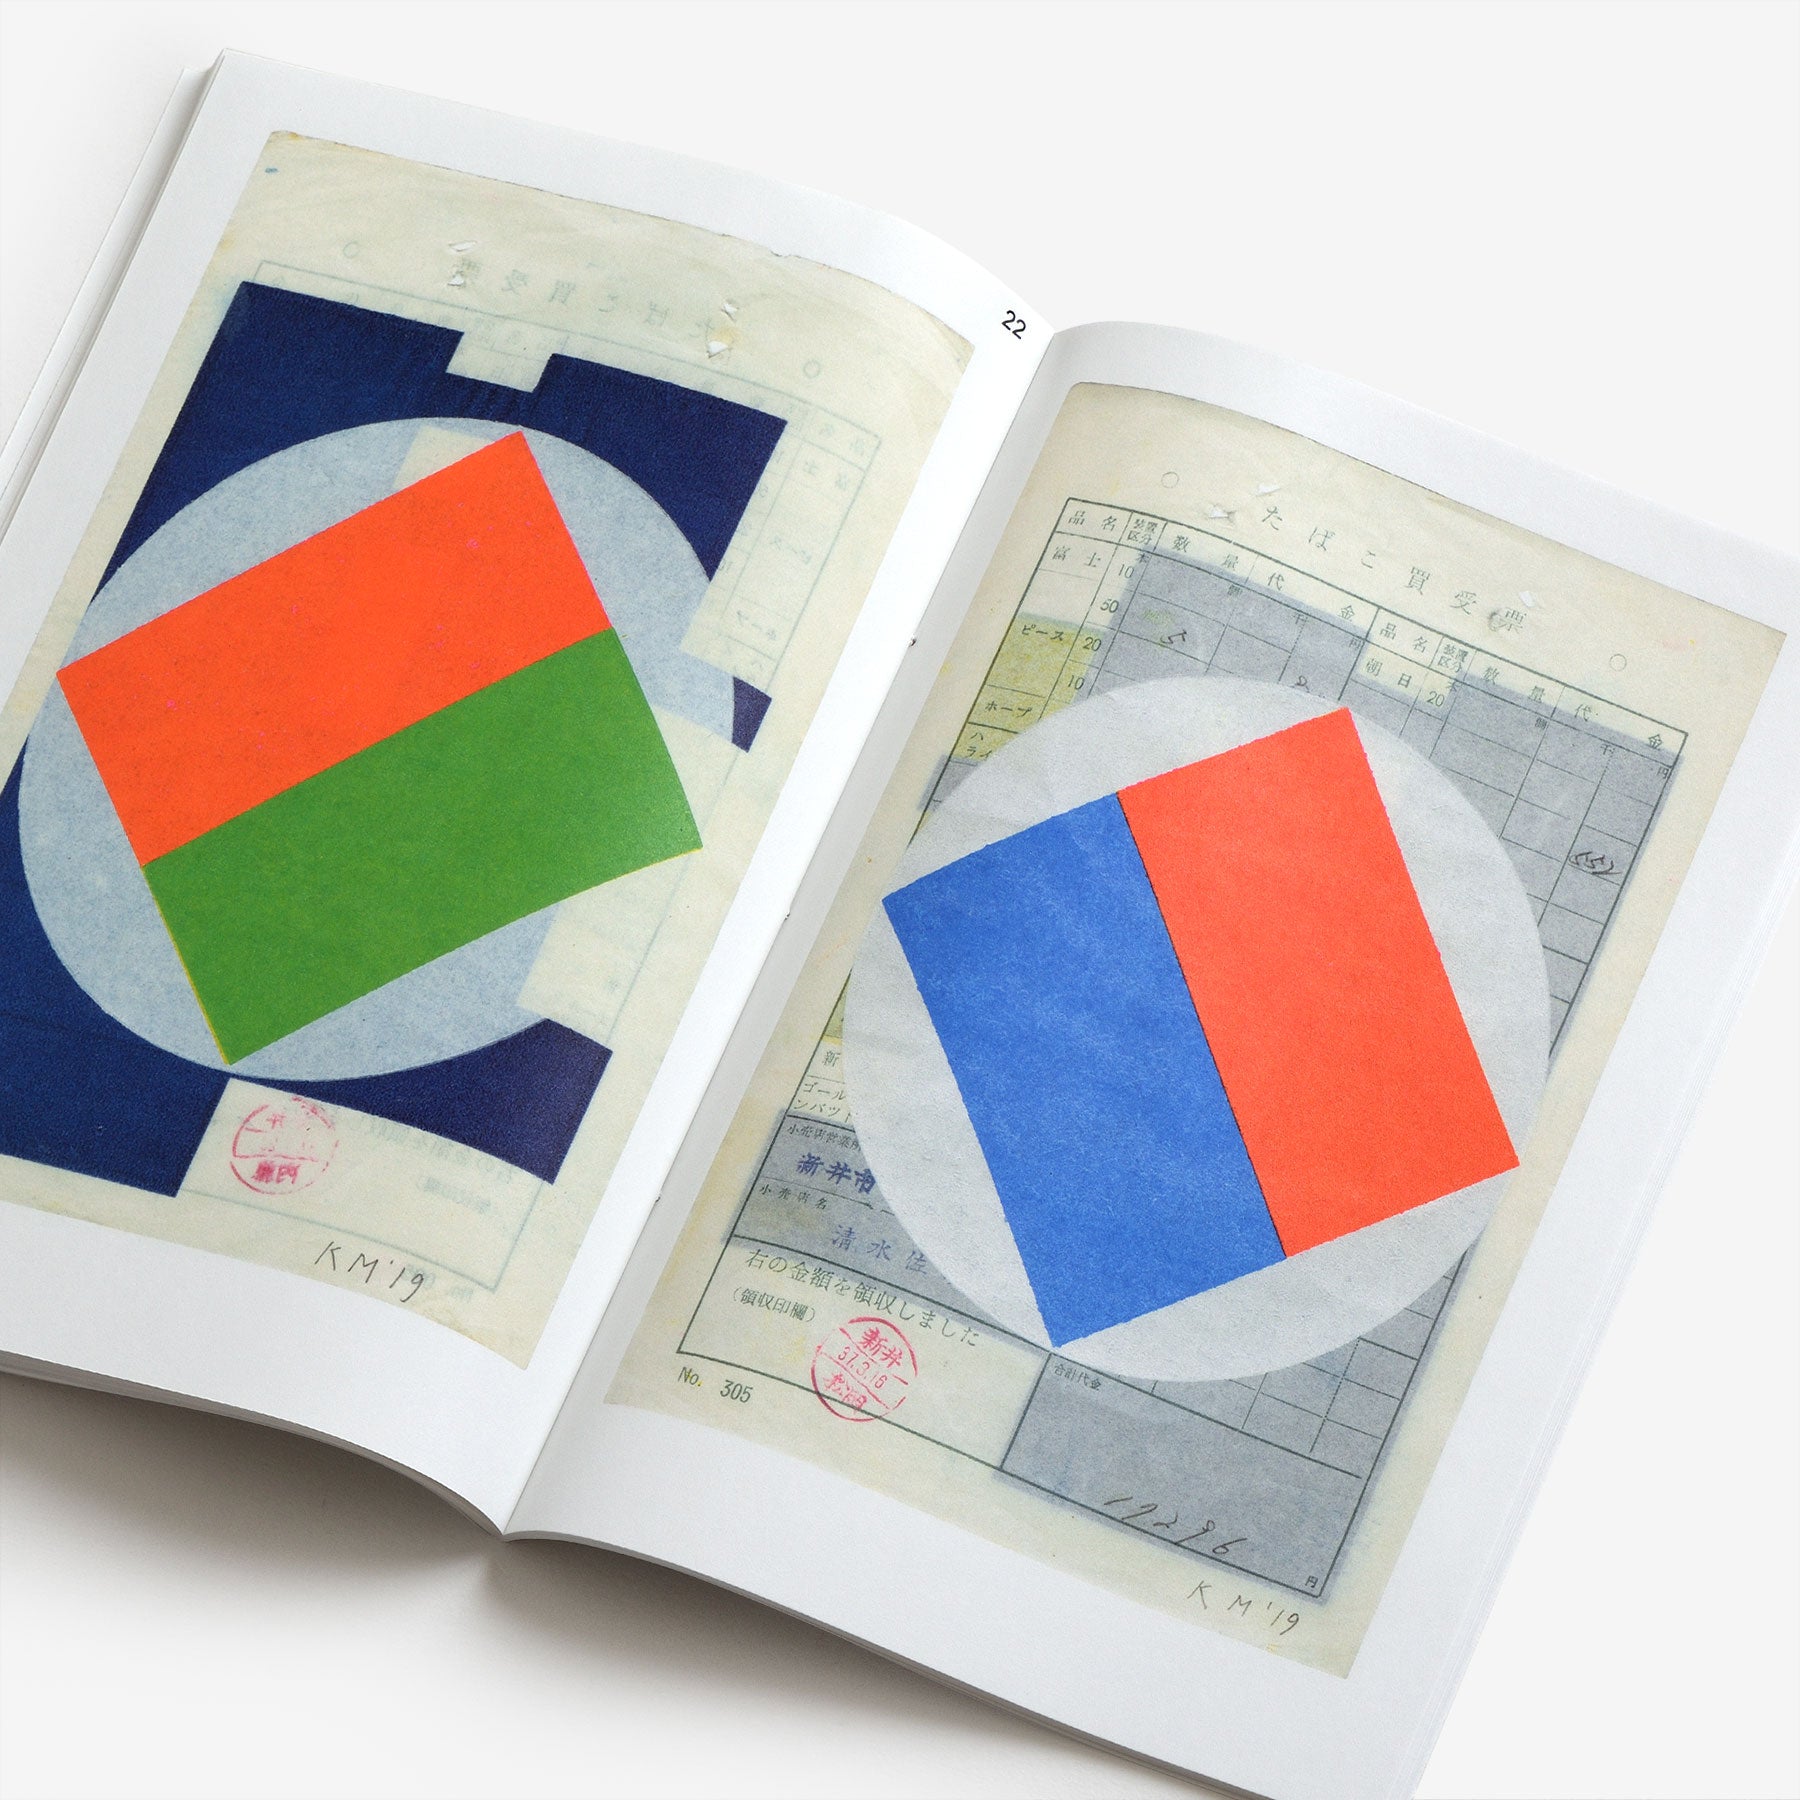 Karel Martens: Tokyo Papers Special Edition